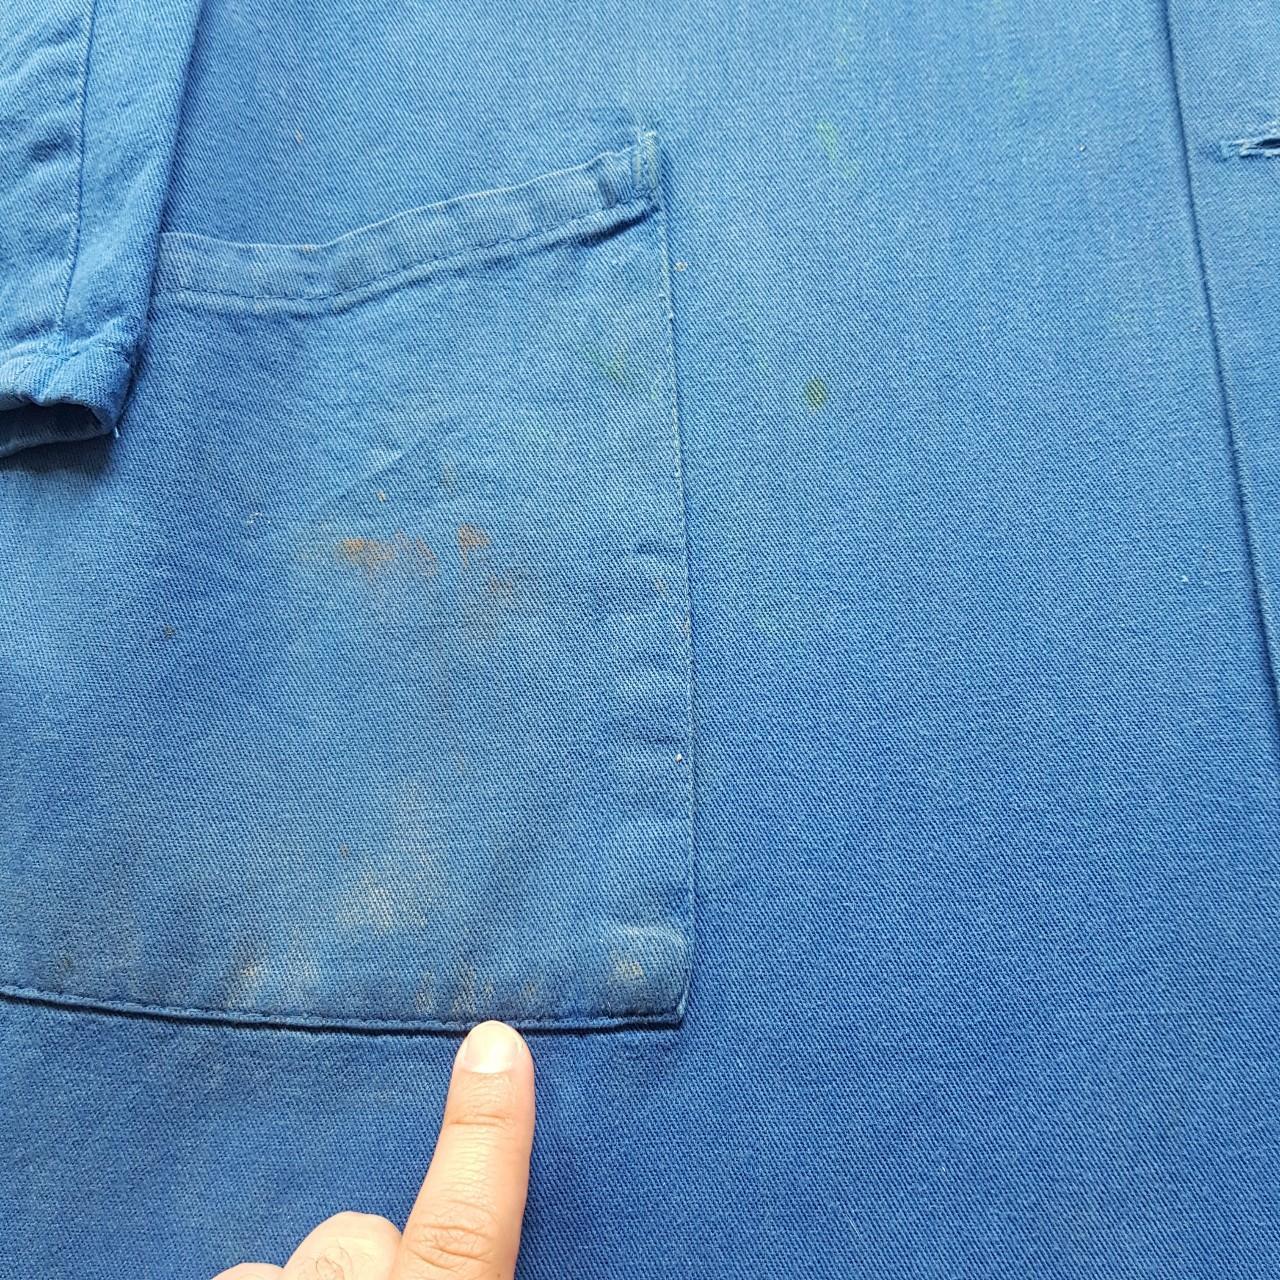 Vintage royal blue french chore long work coat